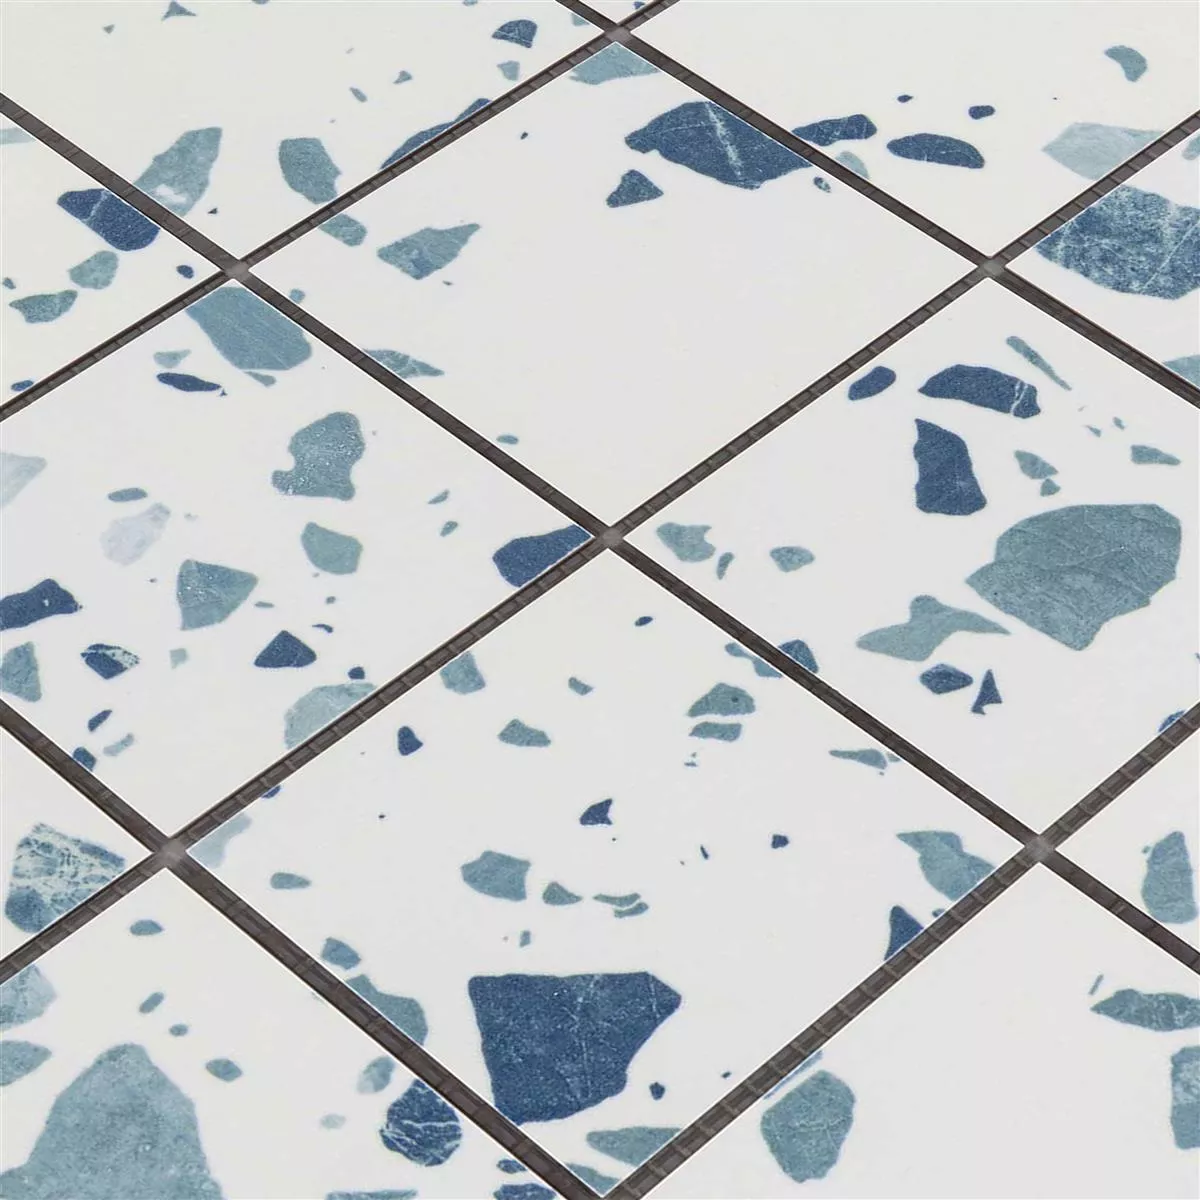 Sample Ceramic Mosaic Tiles Liberty Blue 73x73mm